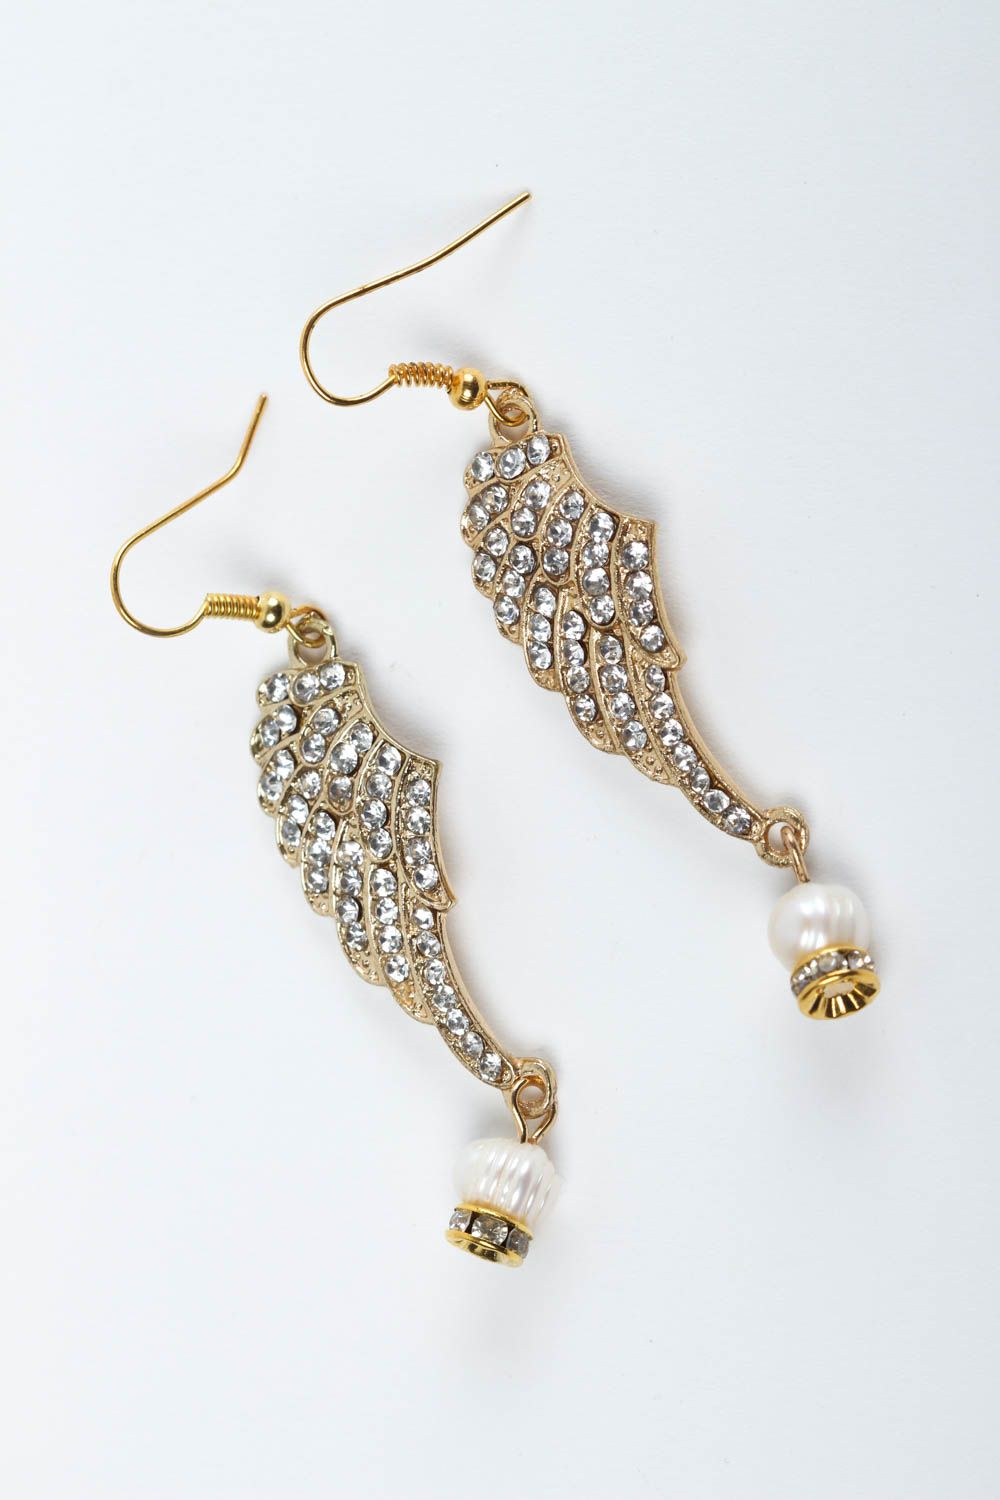 Handmade earrings designer earrings unusual gift elite jewelry gift ideas photo 2